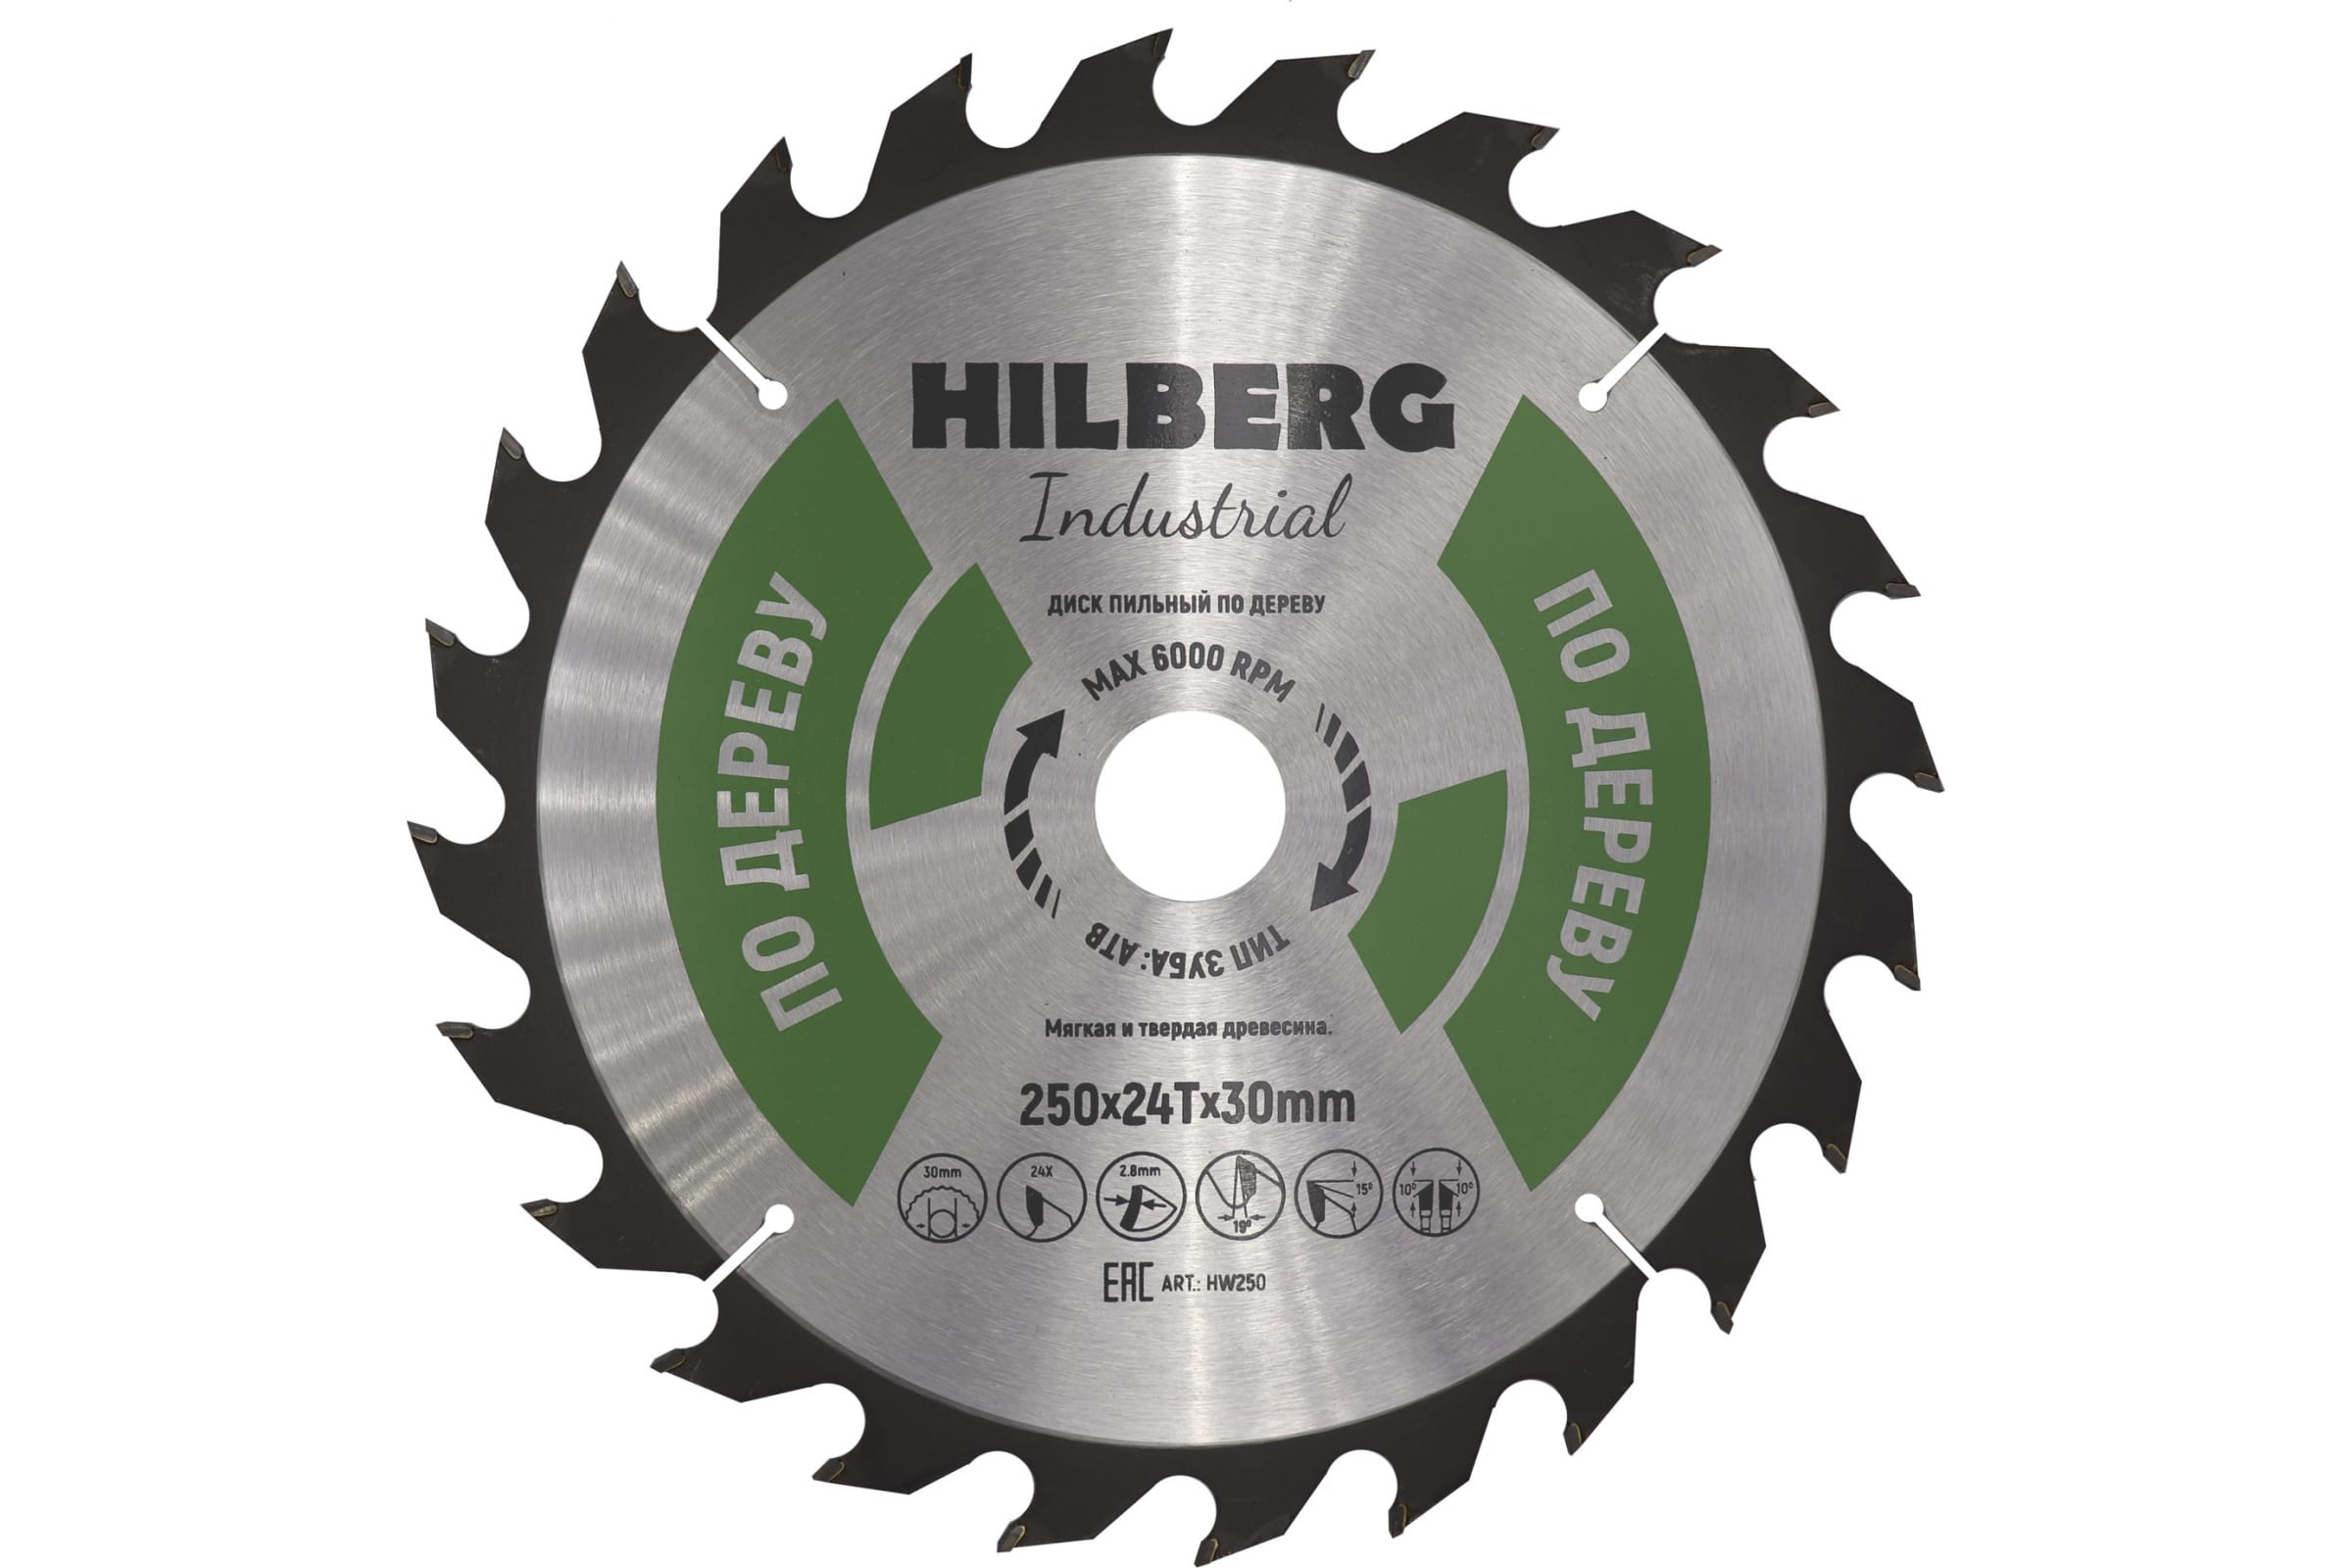 фото Hilberg диск пильный hilberg industrial дерево 250x30x24т hw250